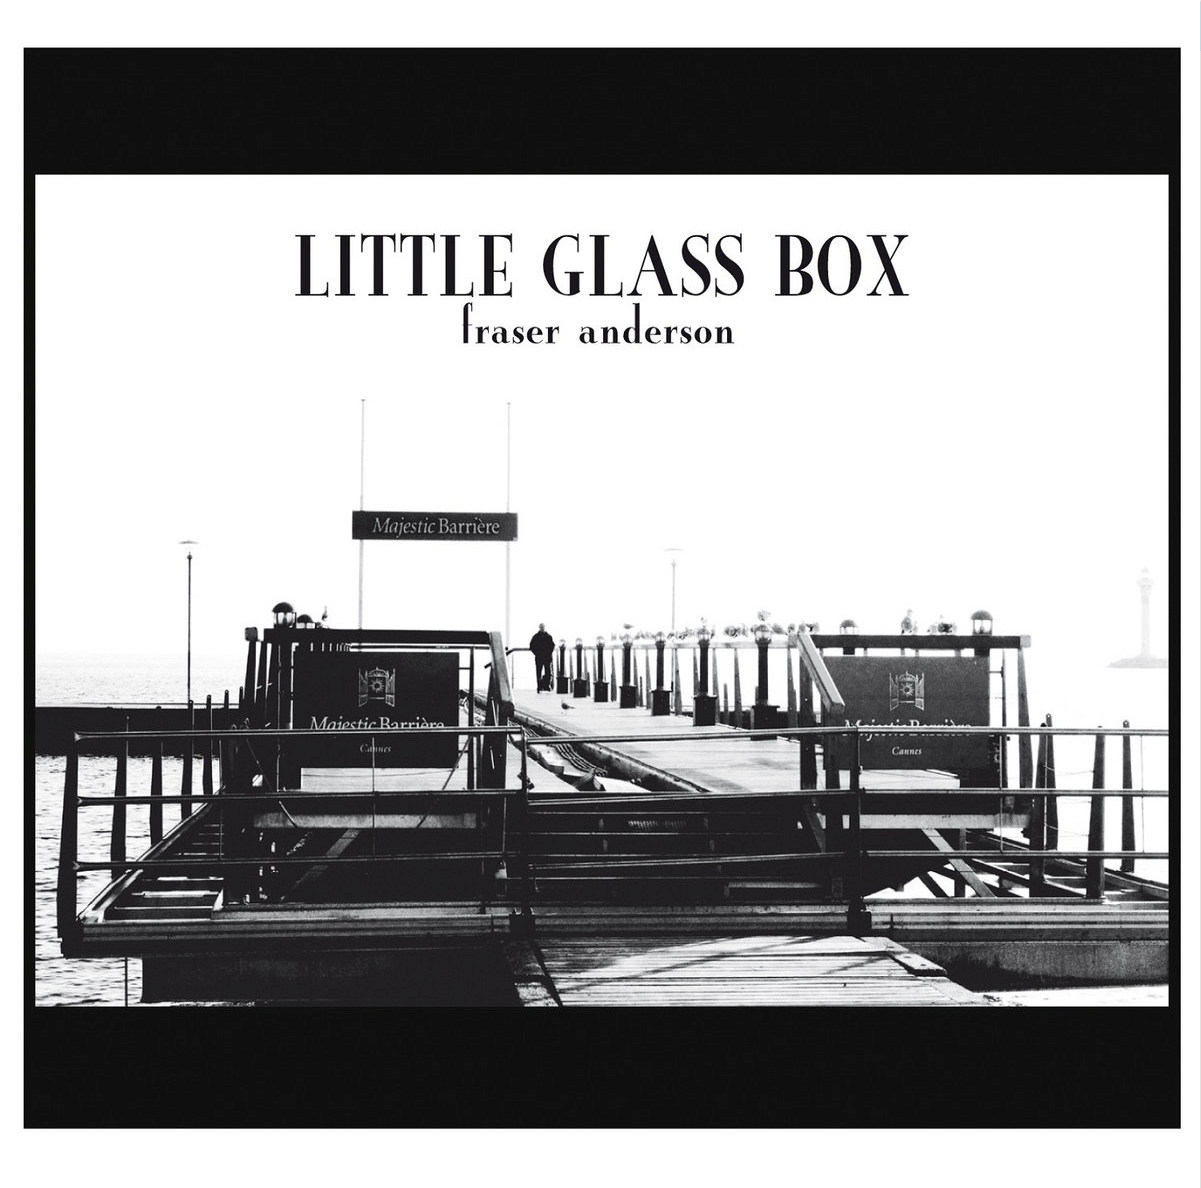 Full album (Digital download) of 'Little Glass Box'.